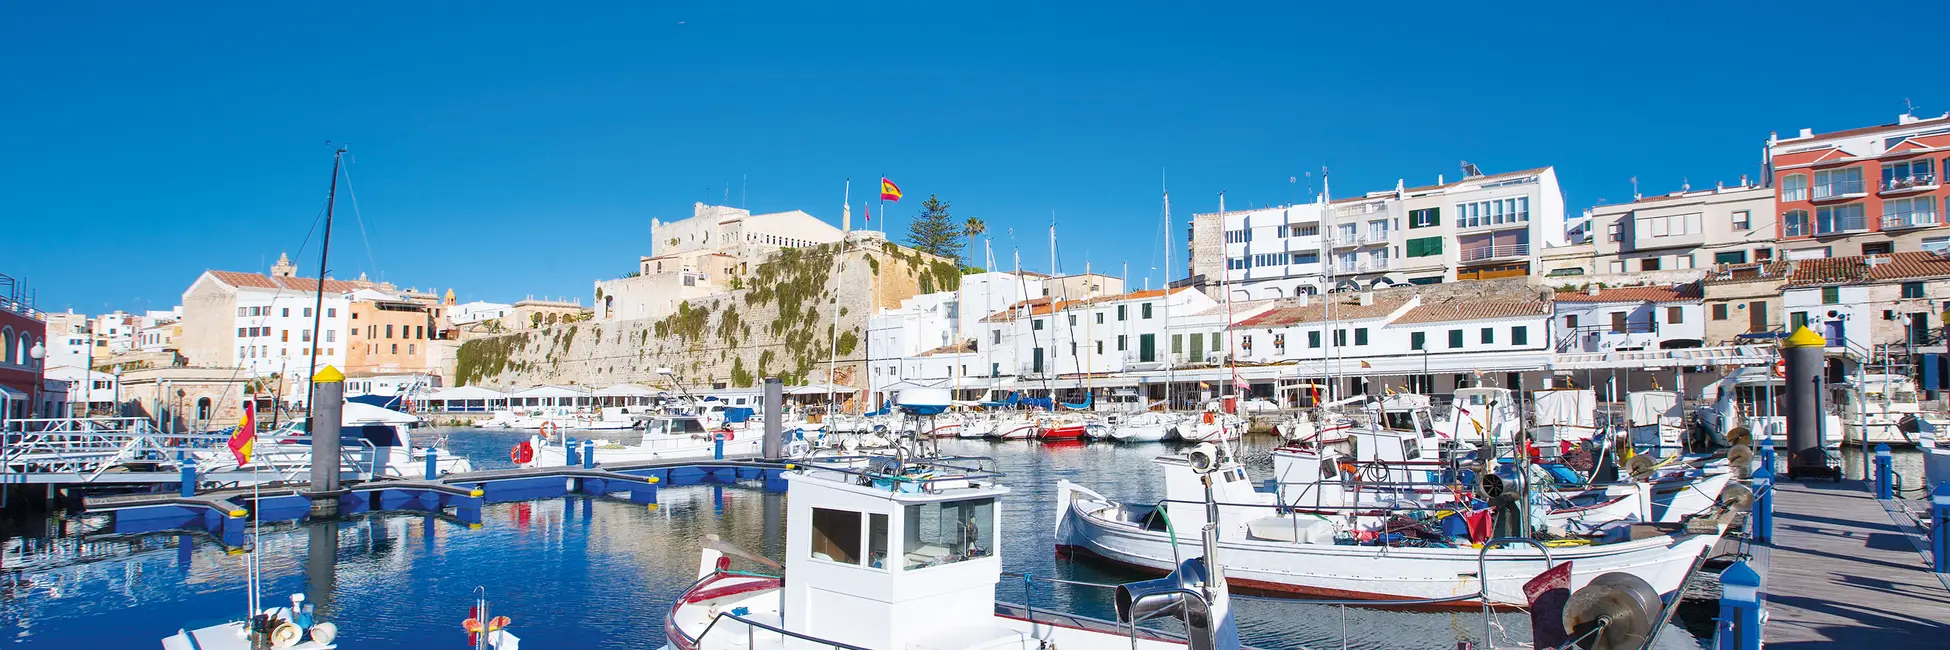 Le port de Ciutadella de Menorca 